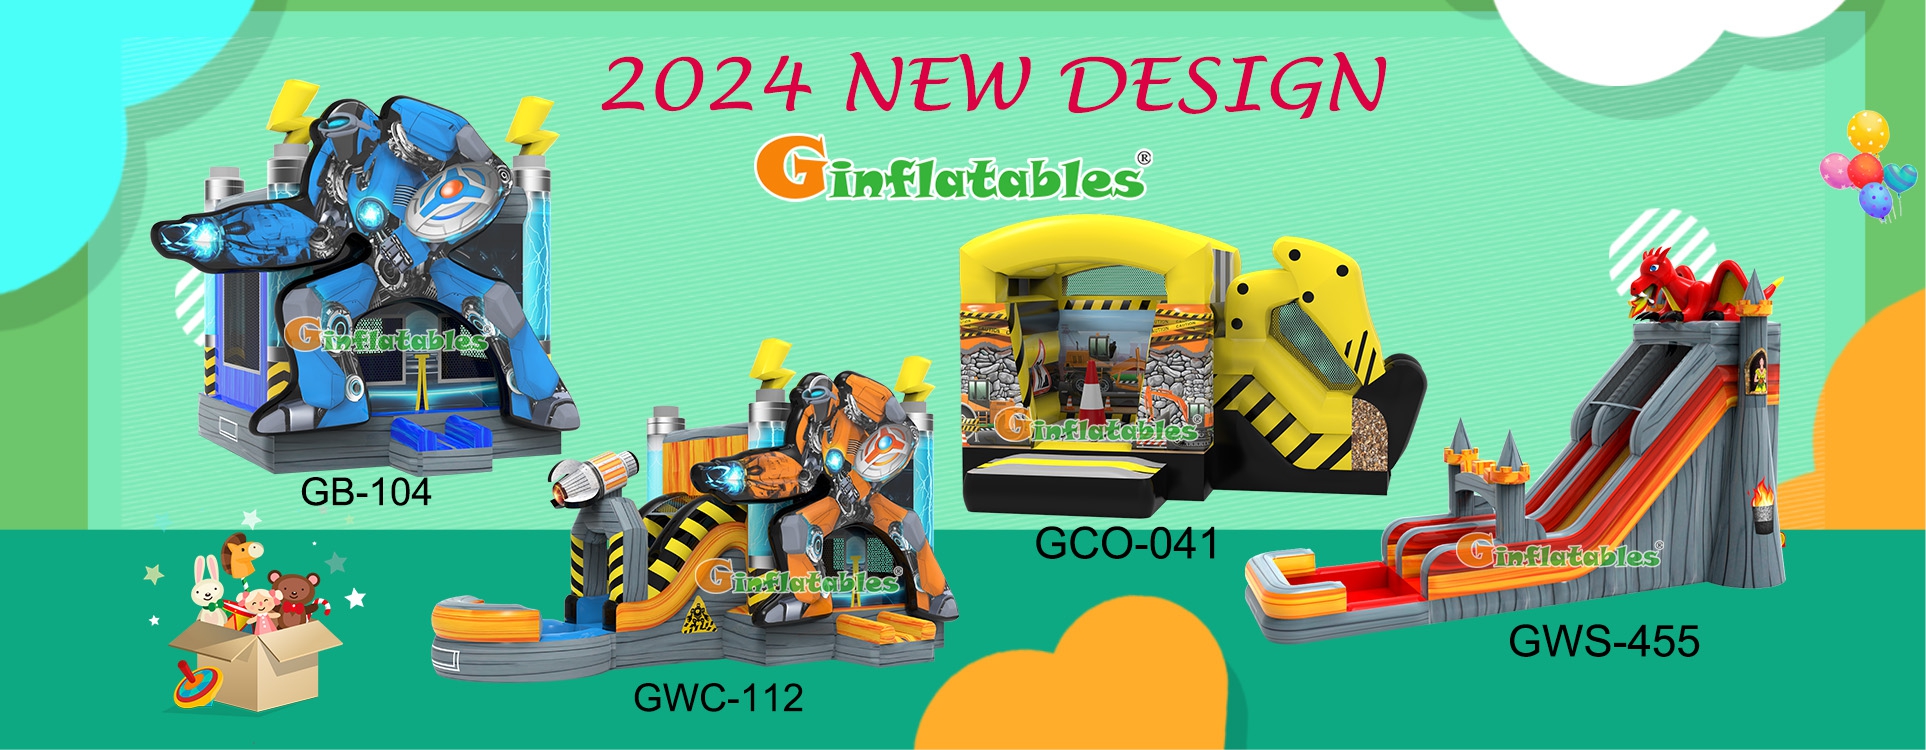 2024-New-Design-3